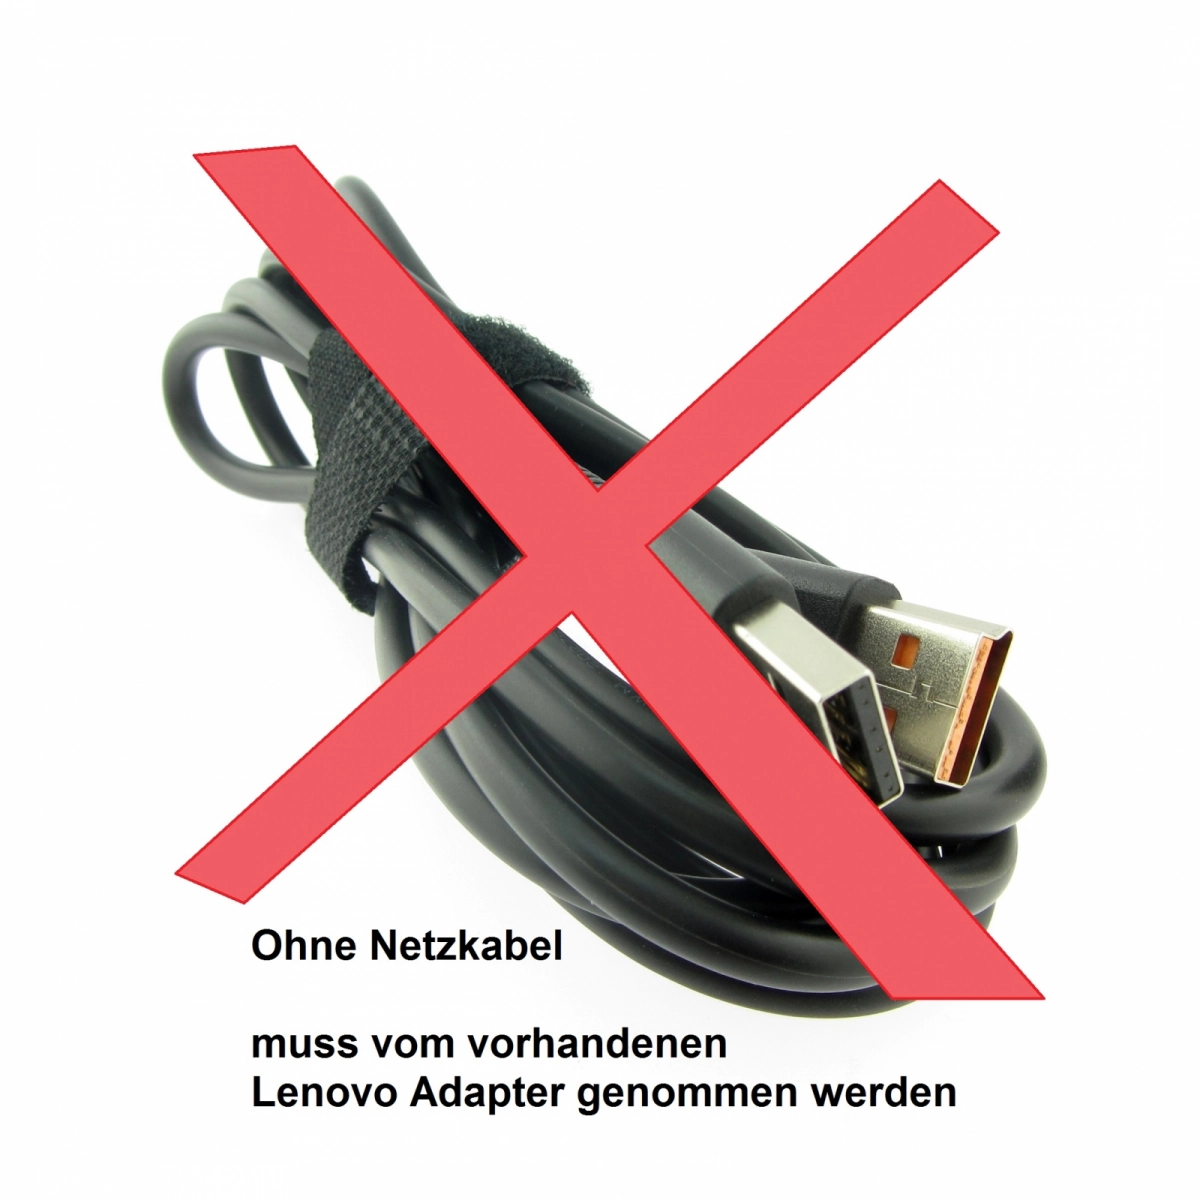 Original Netzteil für LENOVO ADL40WCF 36200584, 20V, 2A, Stecker USB, ohne USB-Kabel